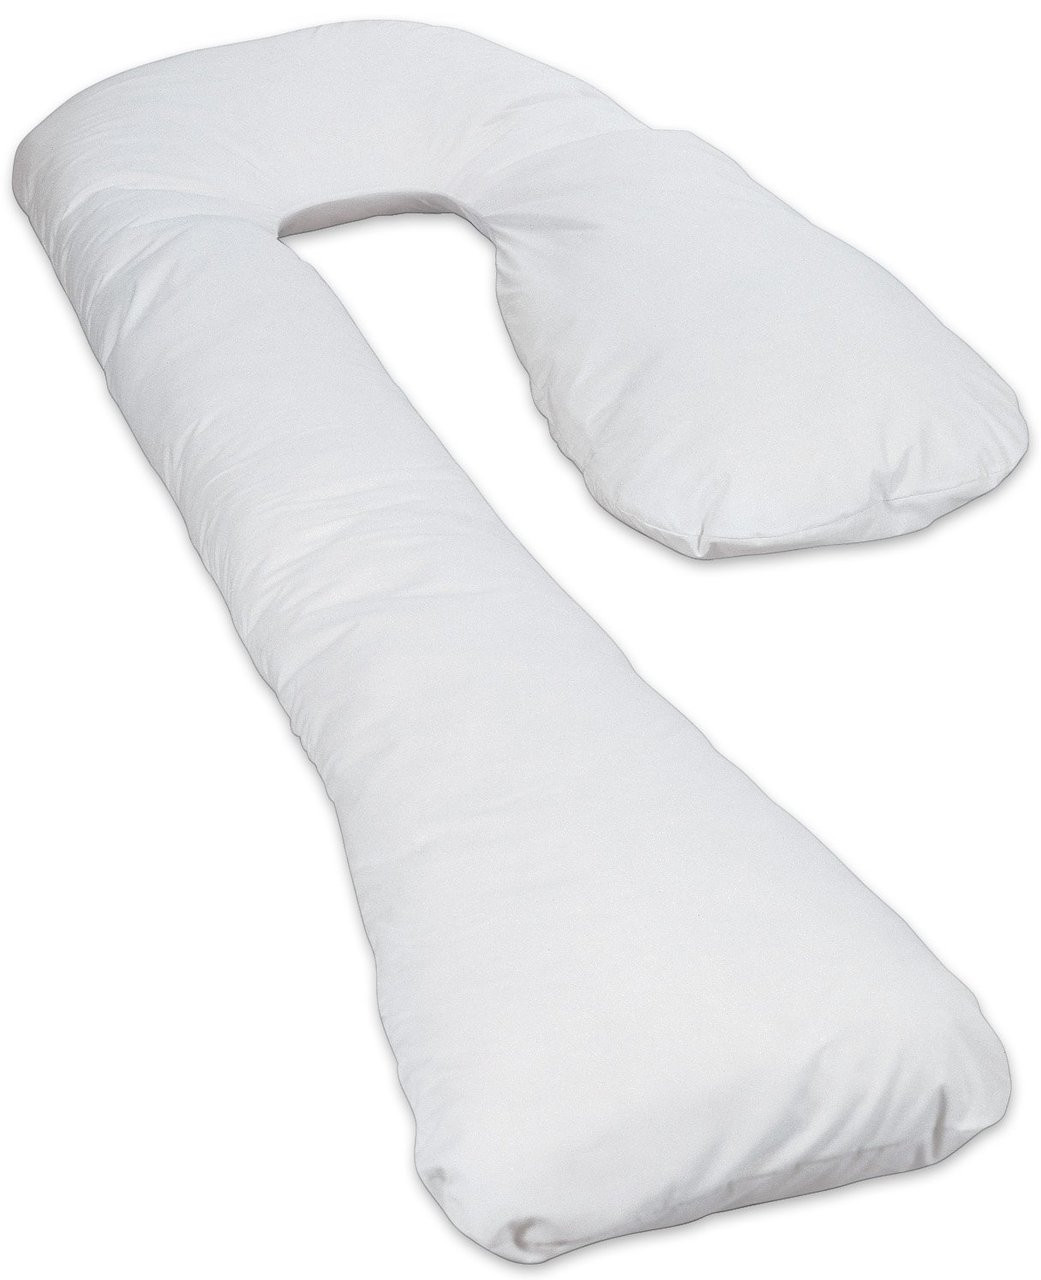 leachco pillow